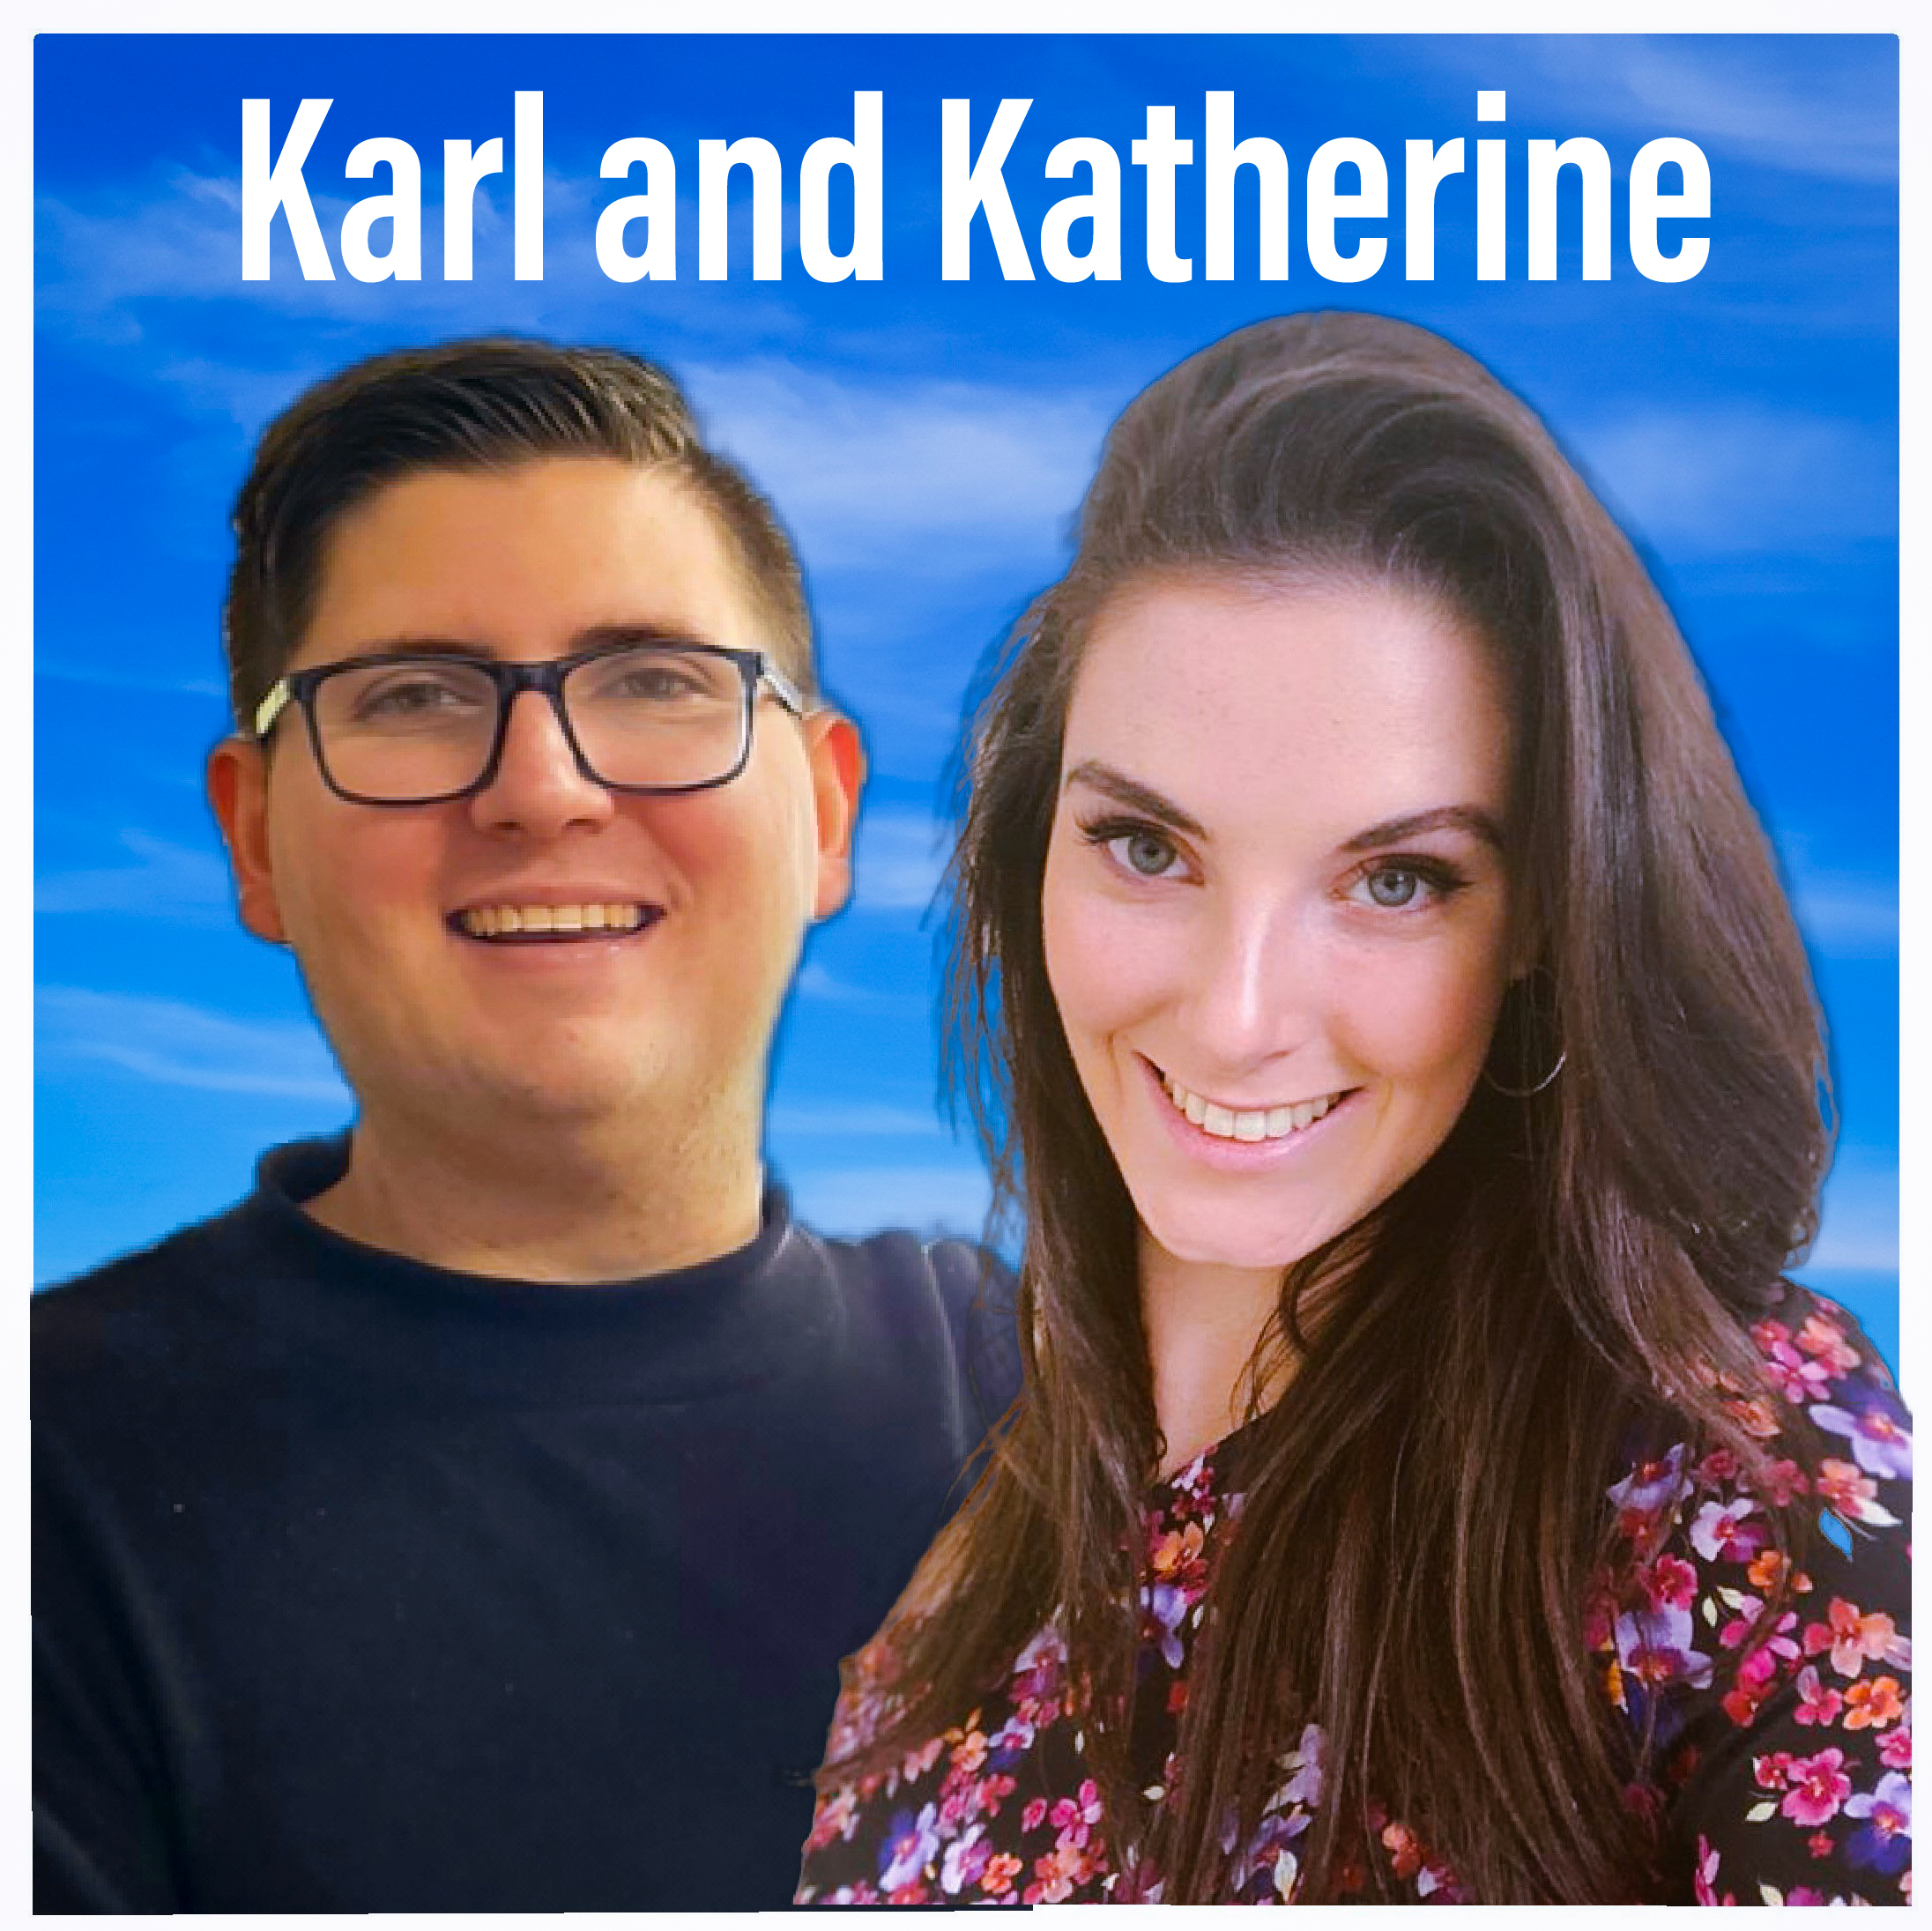 Karl and Katherine - Monday 5th April 2021